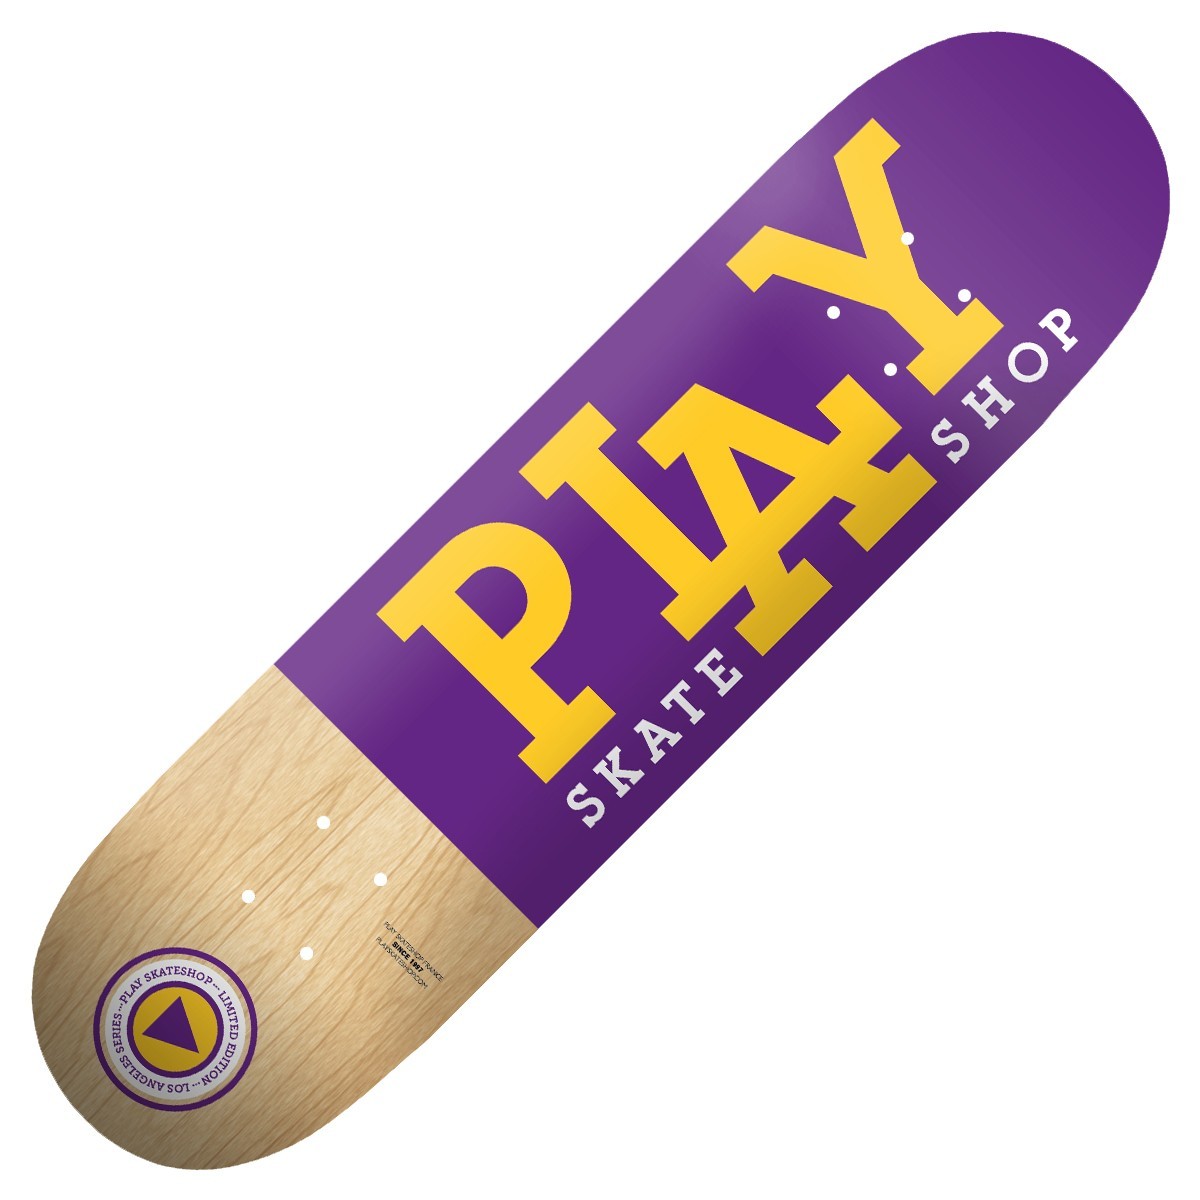 PLAY Skateshop boardshop V4 Los Angeles premium skate board limited